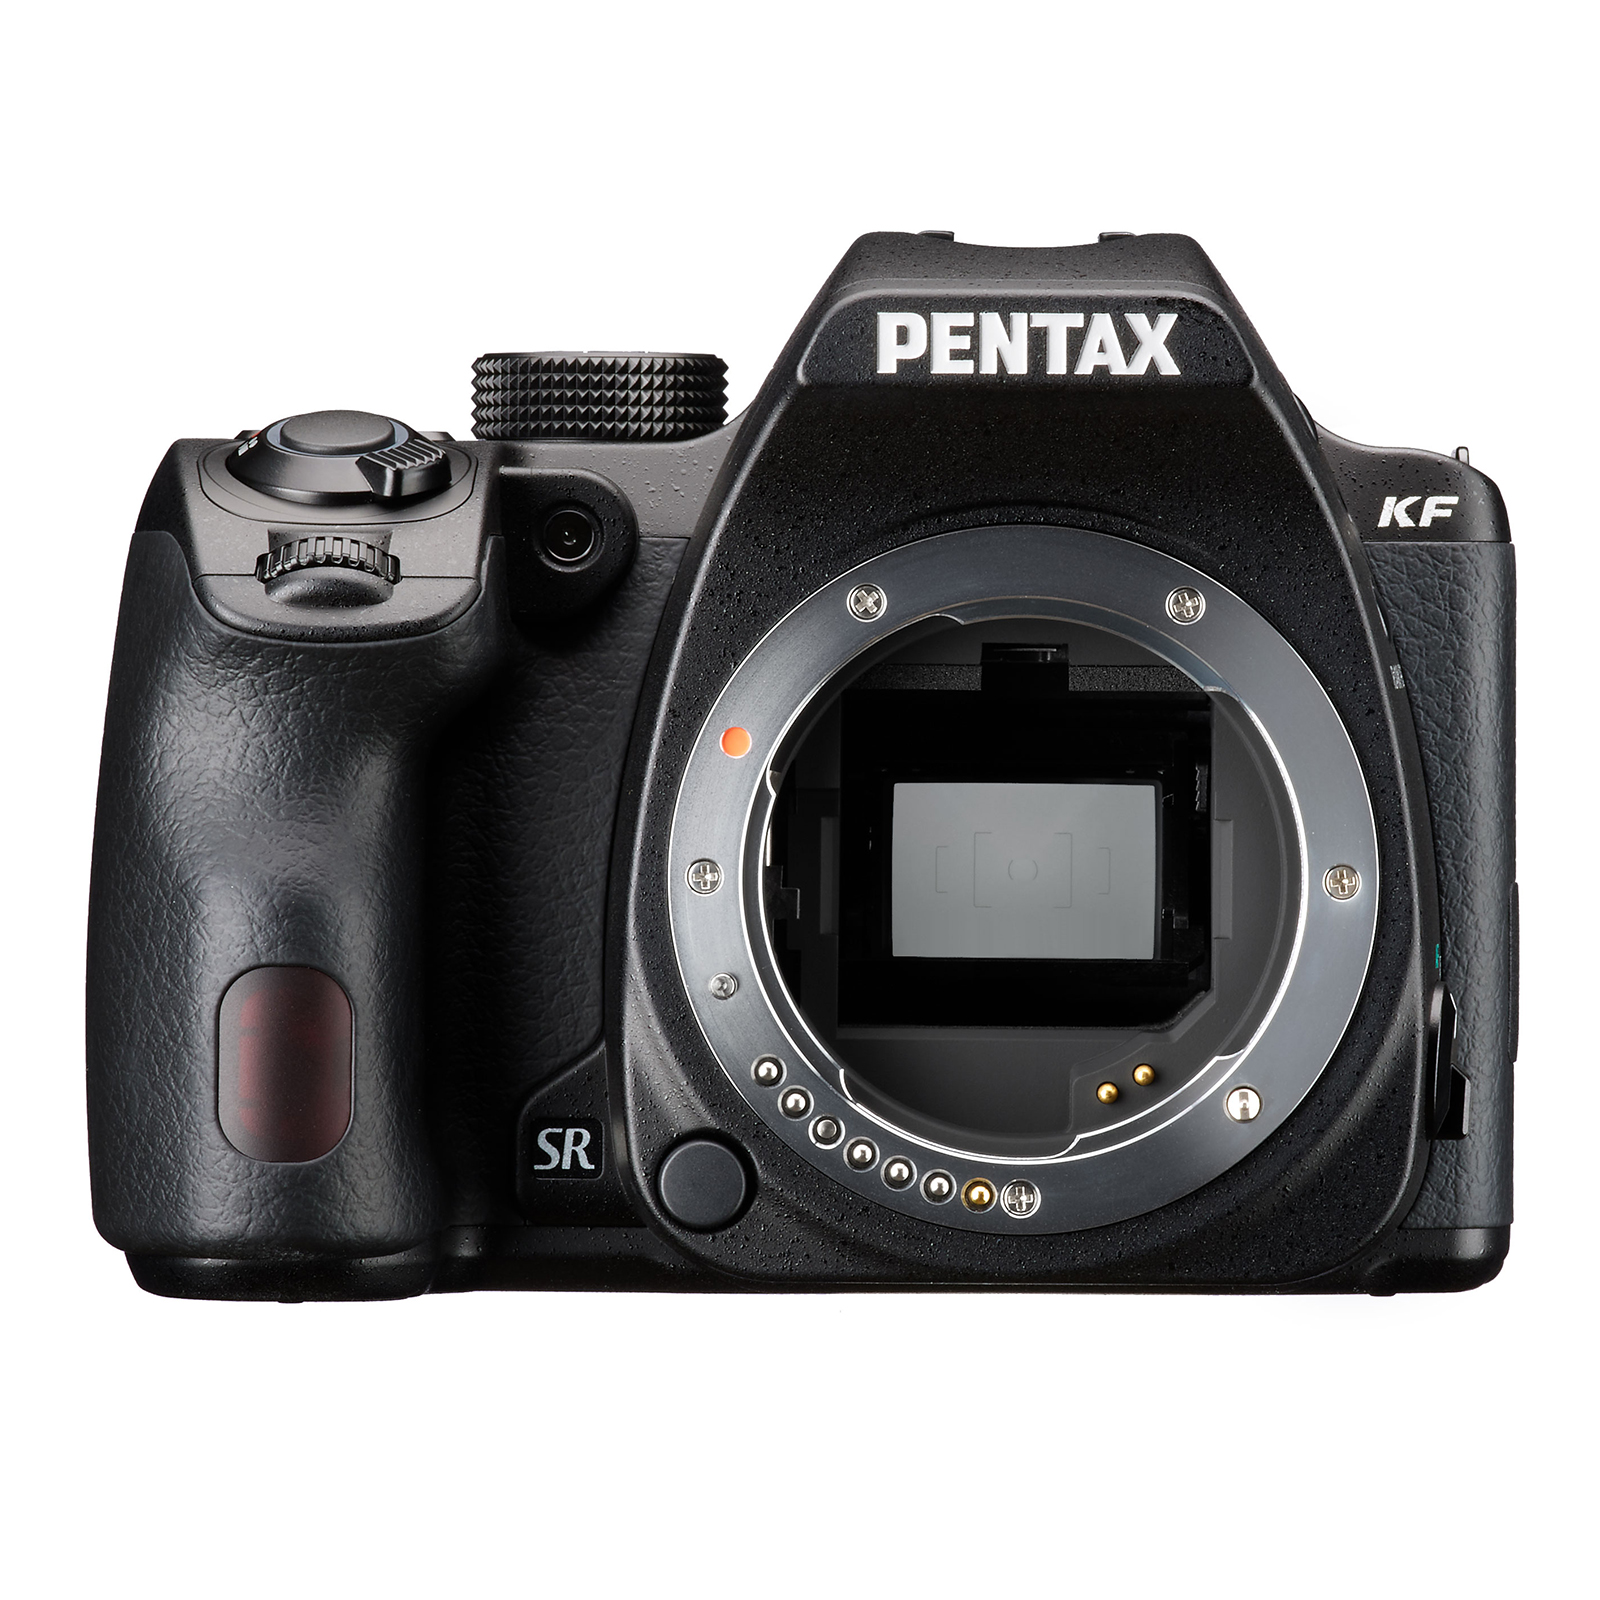 Image of Pentax KF Digital SLR Camera Body